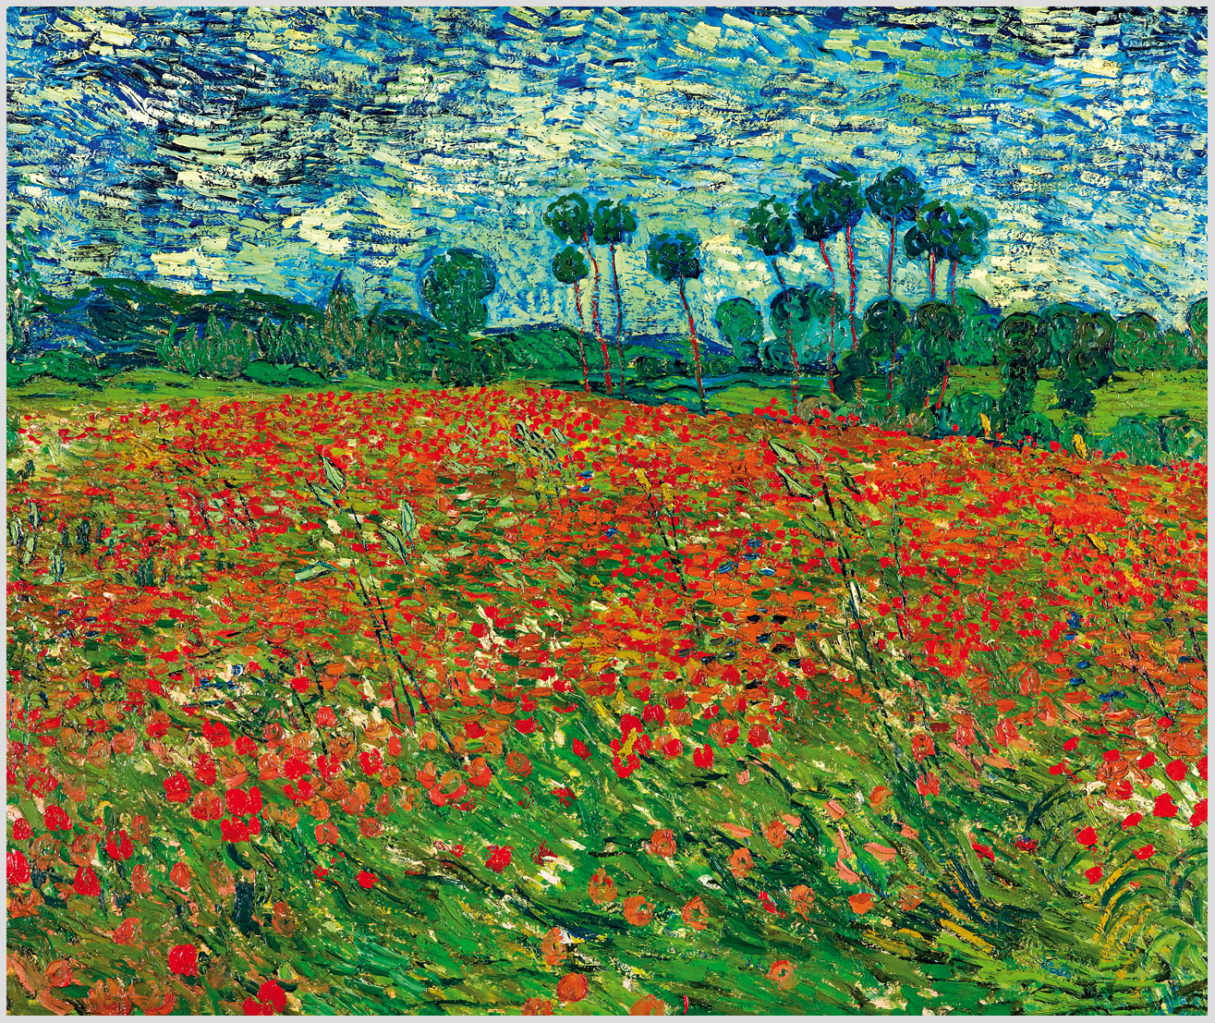 Das Gemälde "Mohnfeld" von Vincent van Gogh aus dem Akustikbilder Katalog der Firma AkuTec